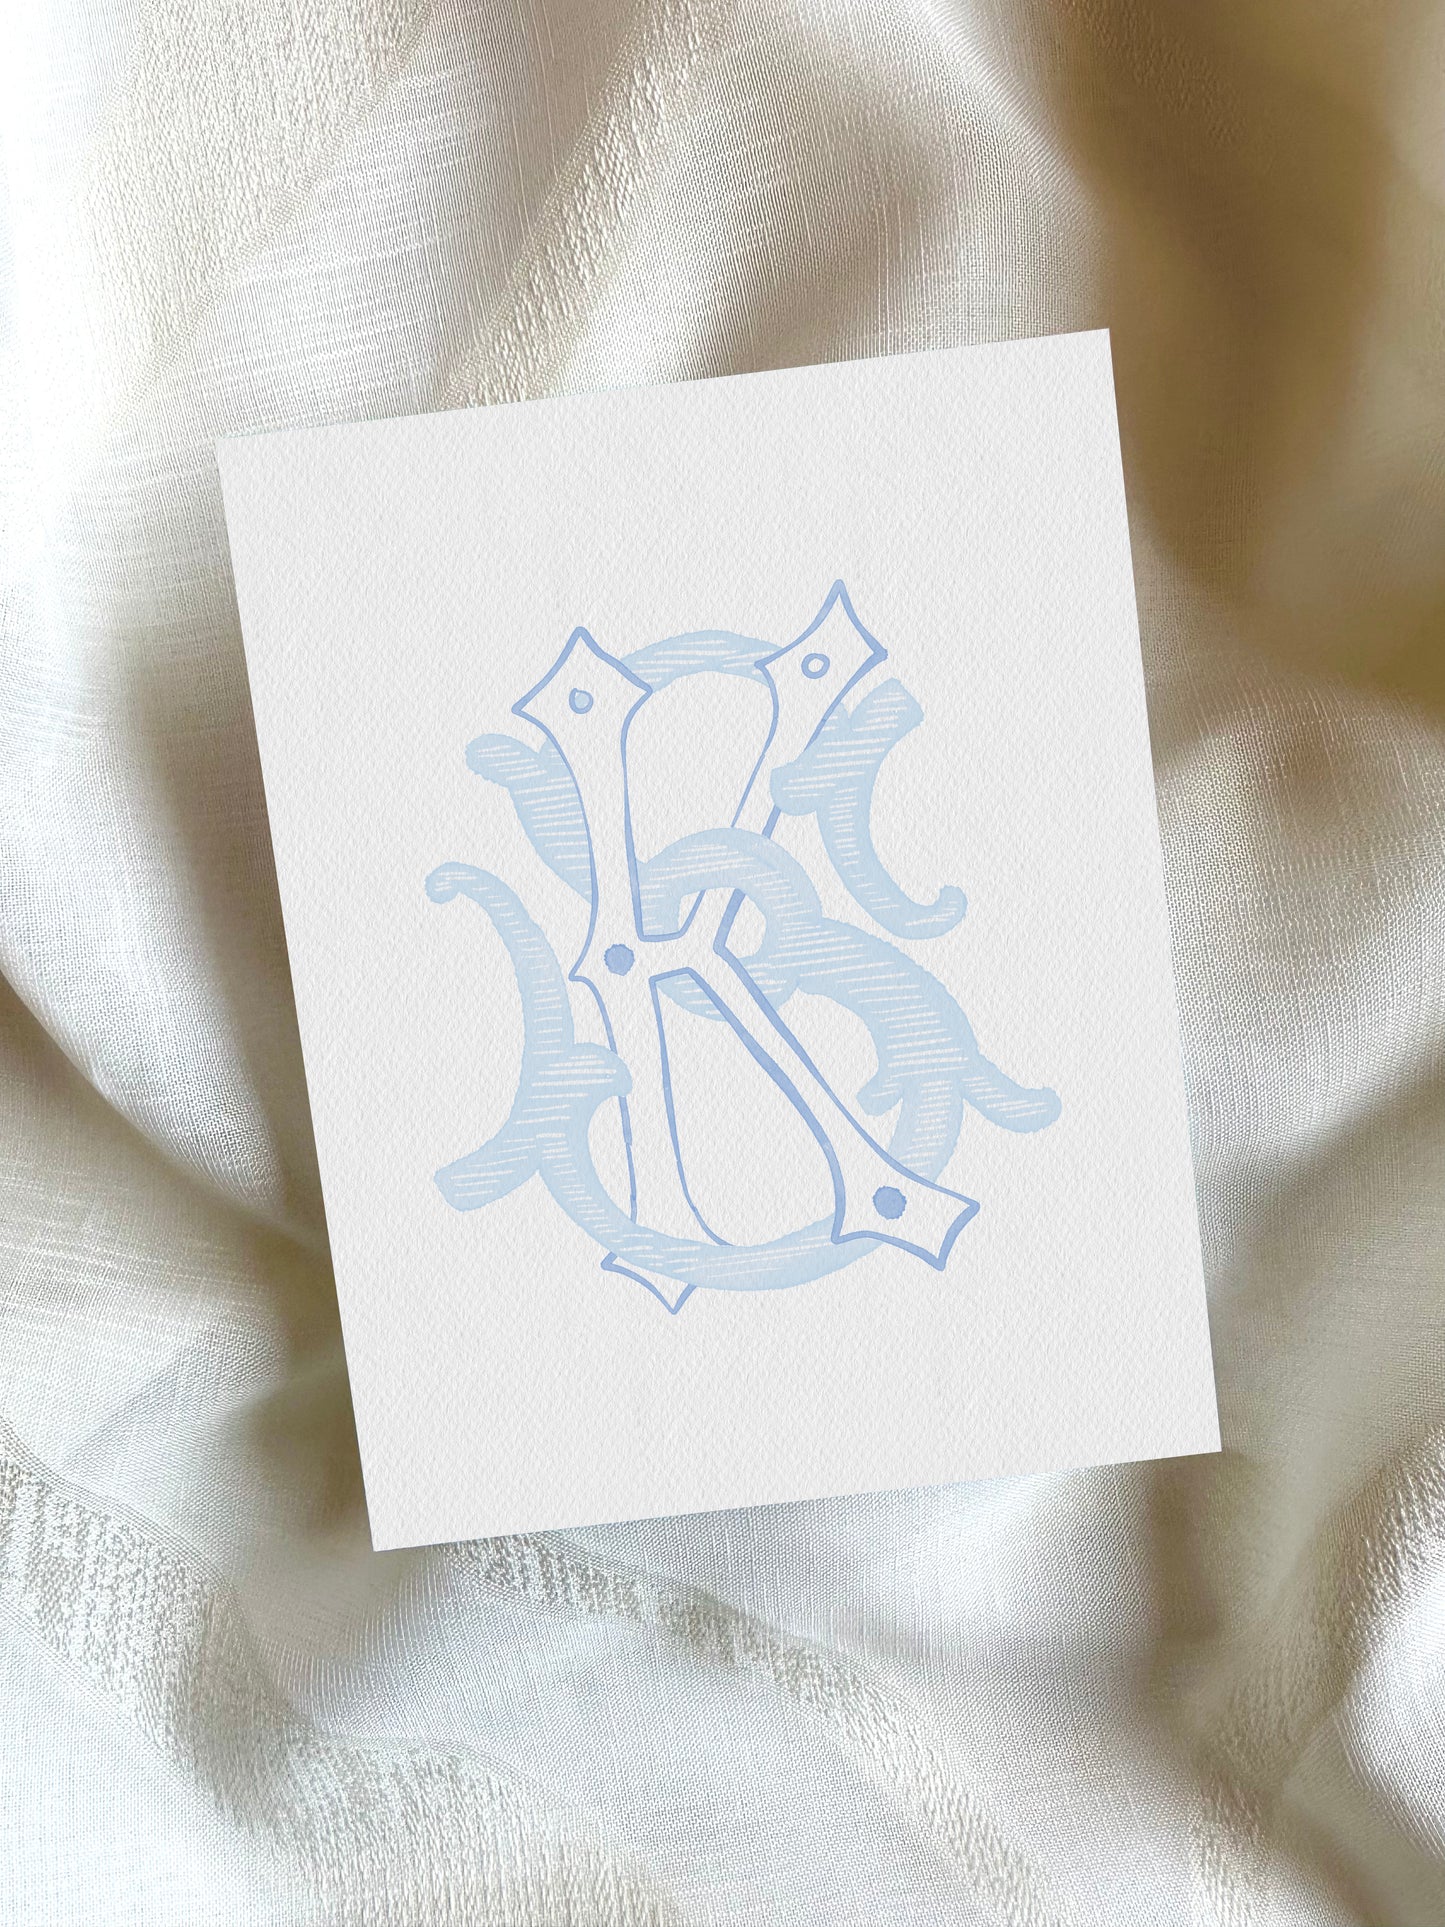 2 Letter Monogram with Letters KS SK | Digital Download - Wedding Monogram SVG, Personal Logo, Wedding Logo for Wedding Invitations The Wedding Crest Lab